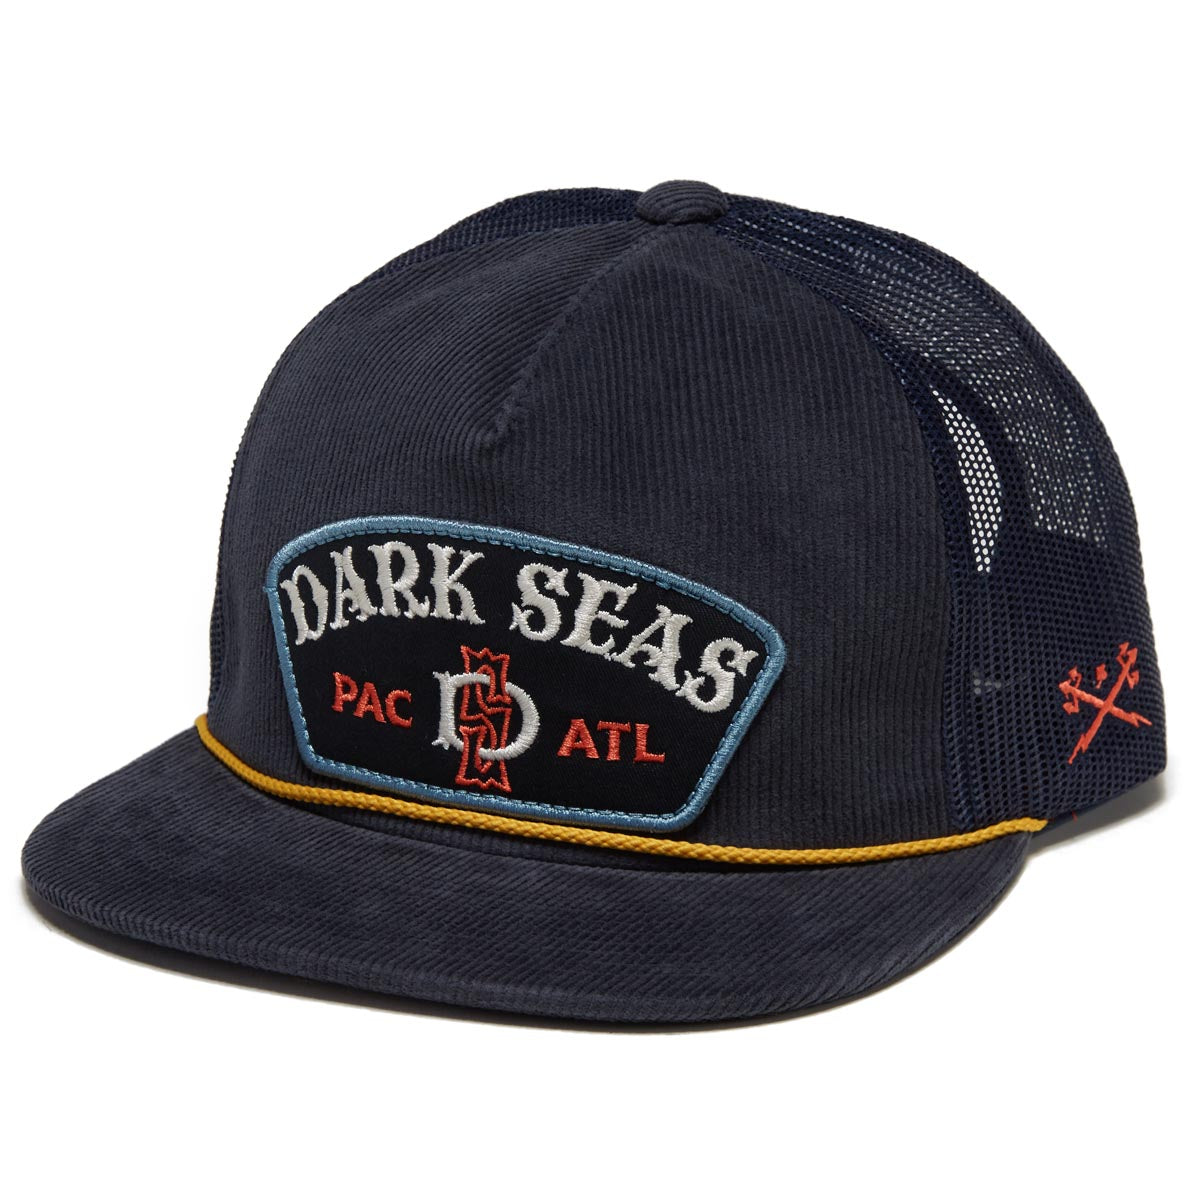 Dark Seas Lyon Hat - Navy image 1